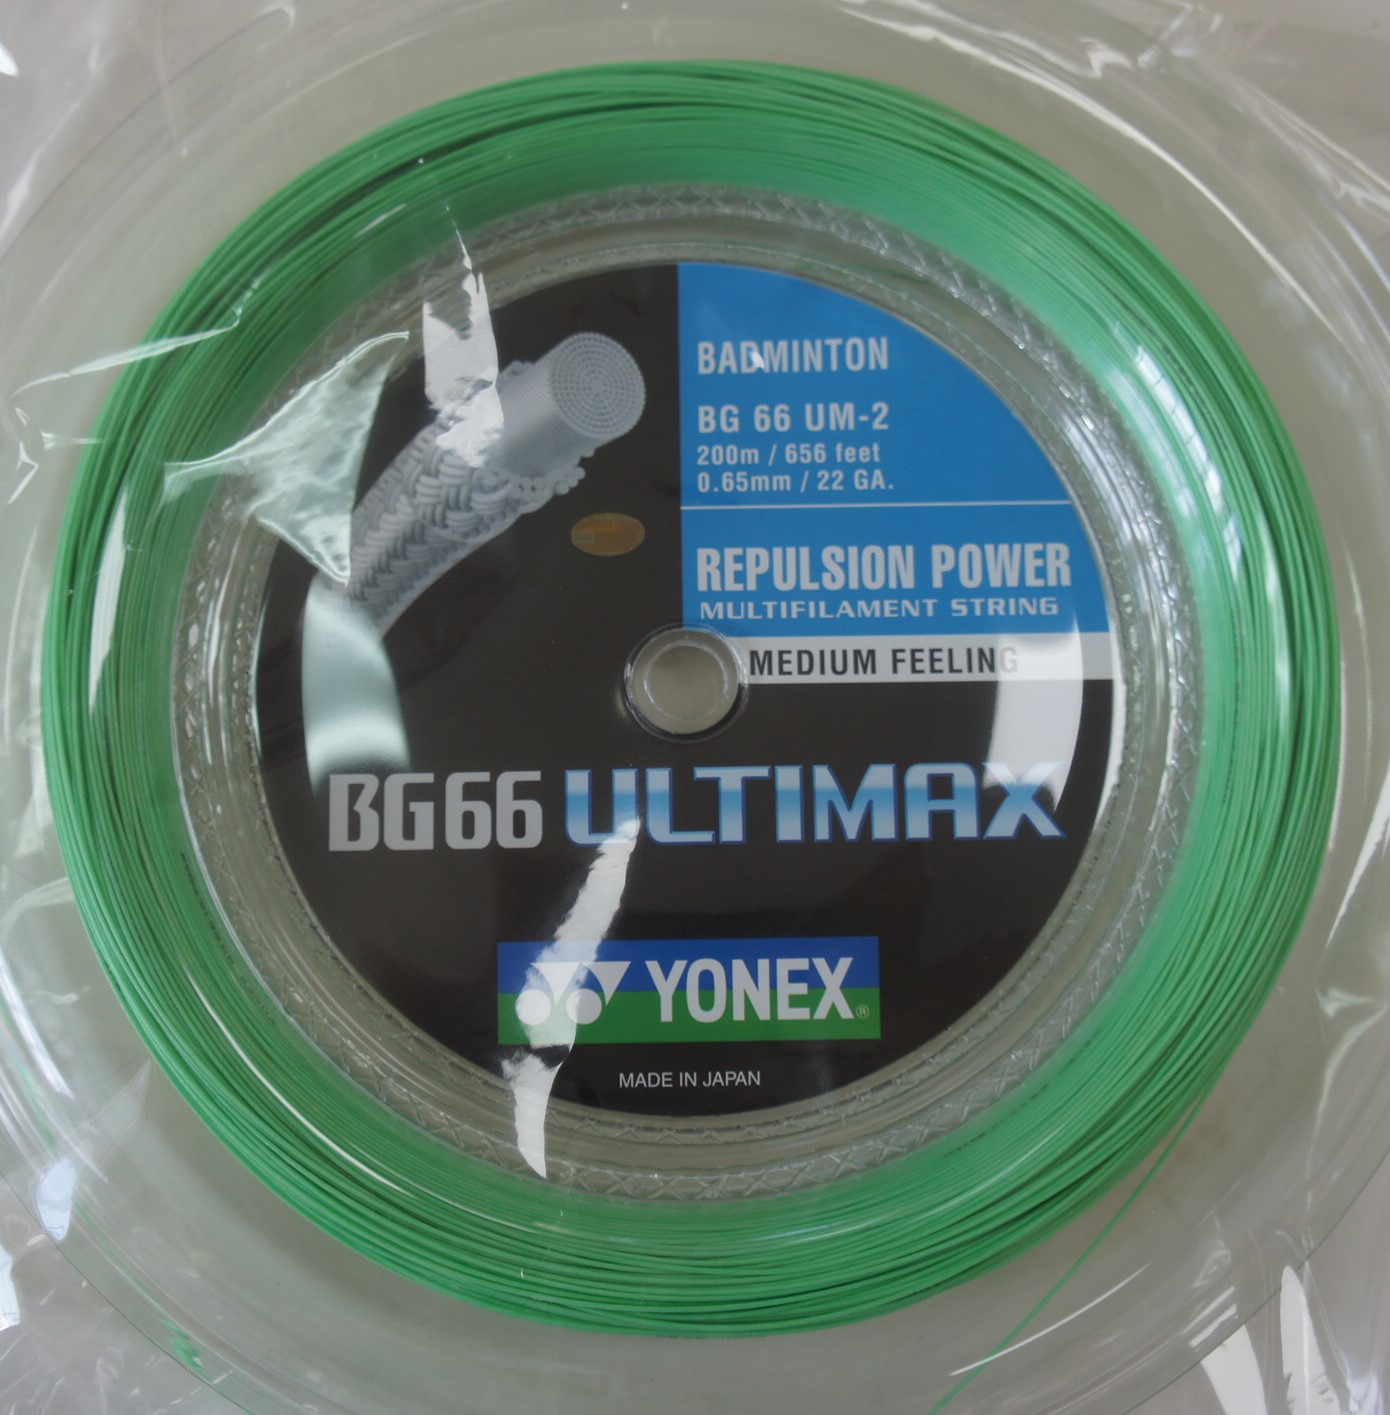 YONEX BG66 Ultimax Badminton Coil String - 200m - BG66UM - Patel Green